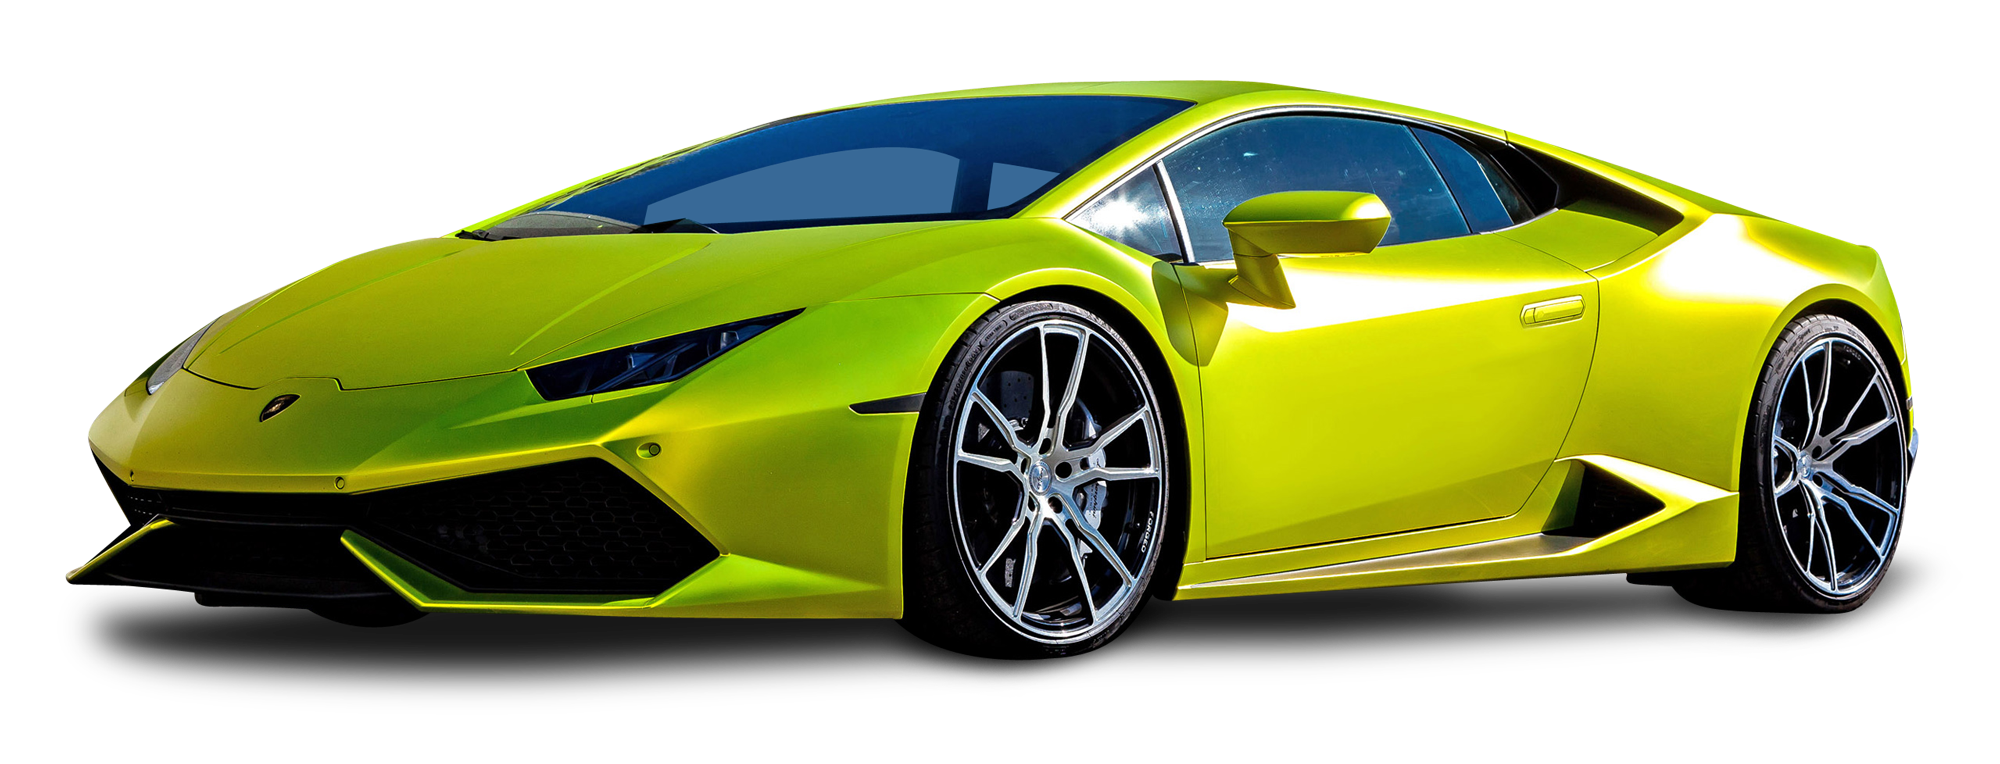 Lamborghini Veneno PNG Free File Download